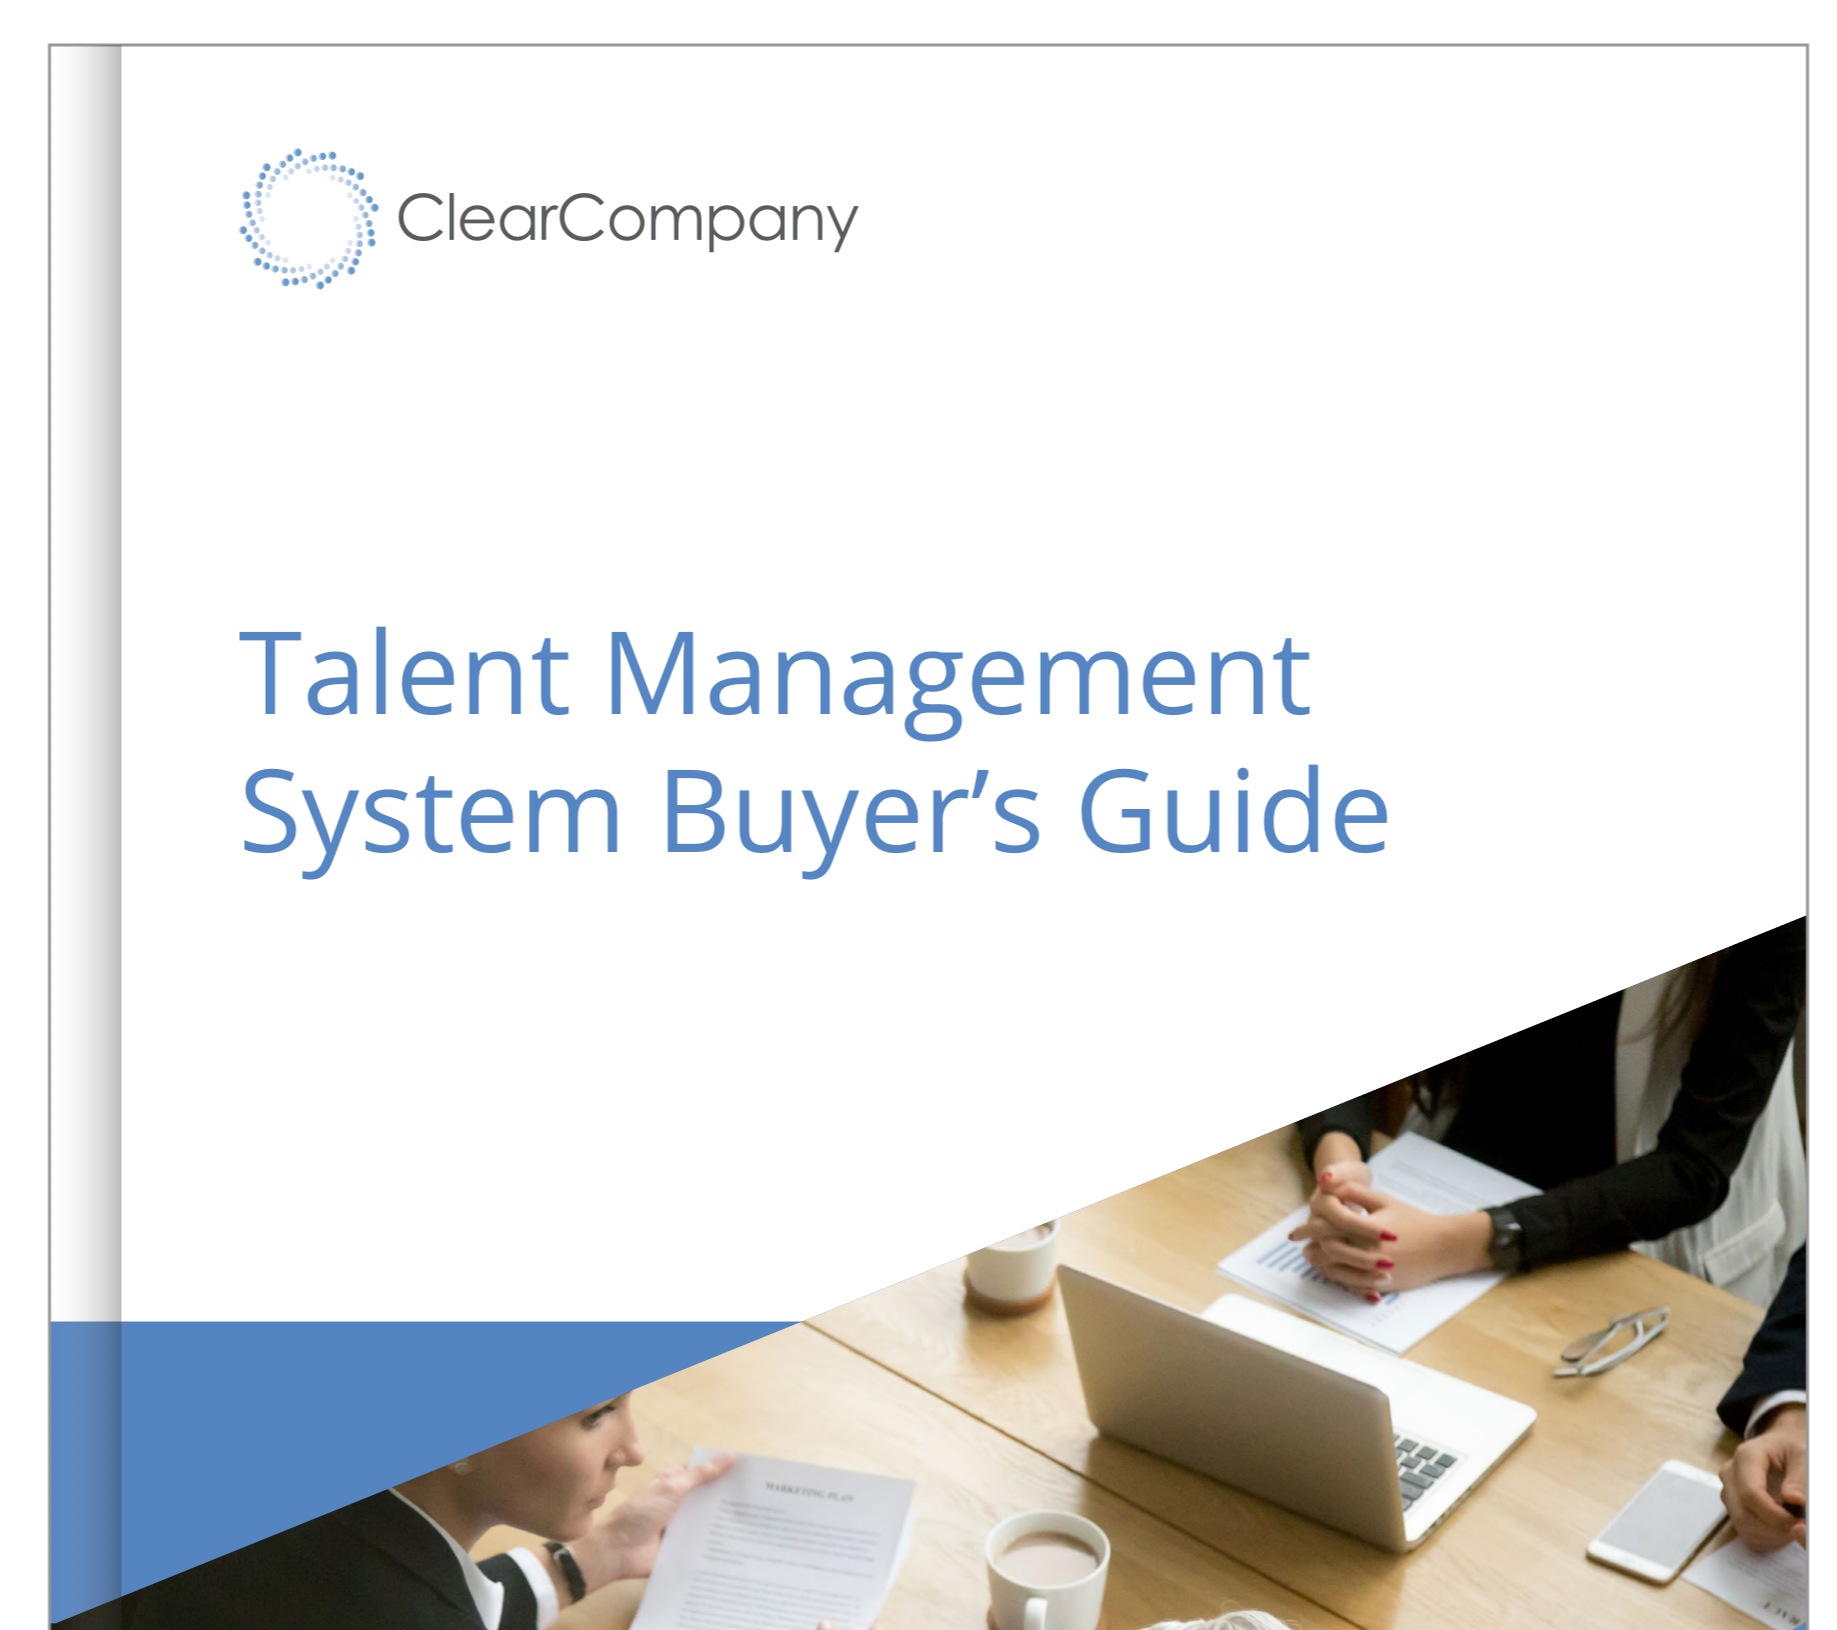 Talent-Management-System-Buyer’s-Guide-Mockup-4-1